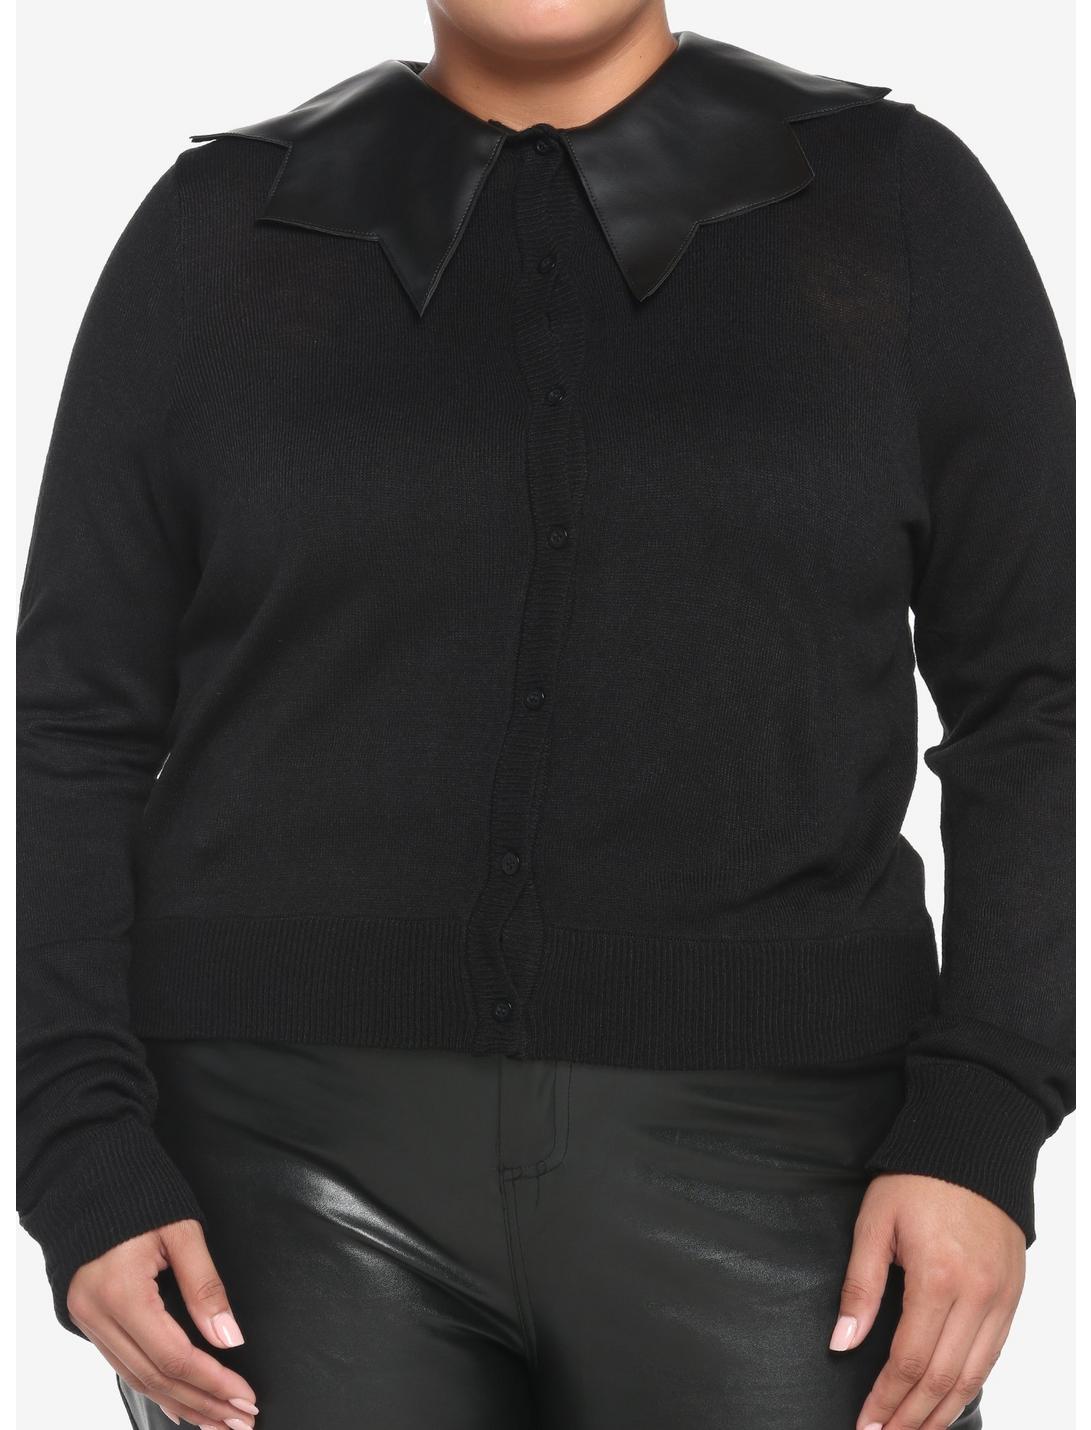 Black Bat Wing Collar Cardigan Plus Size, DEEP BLACK, hi-res